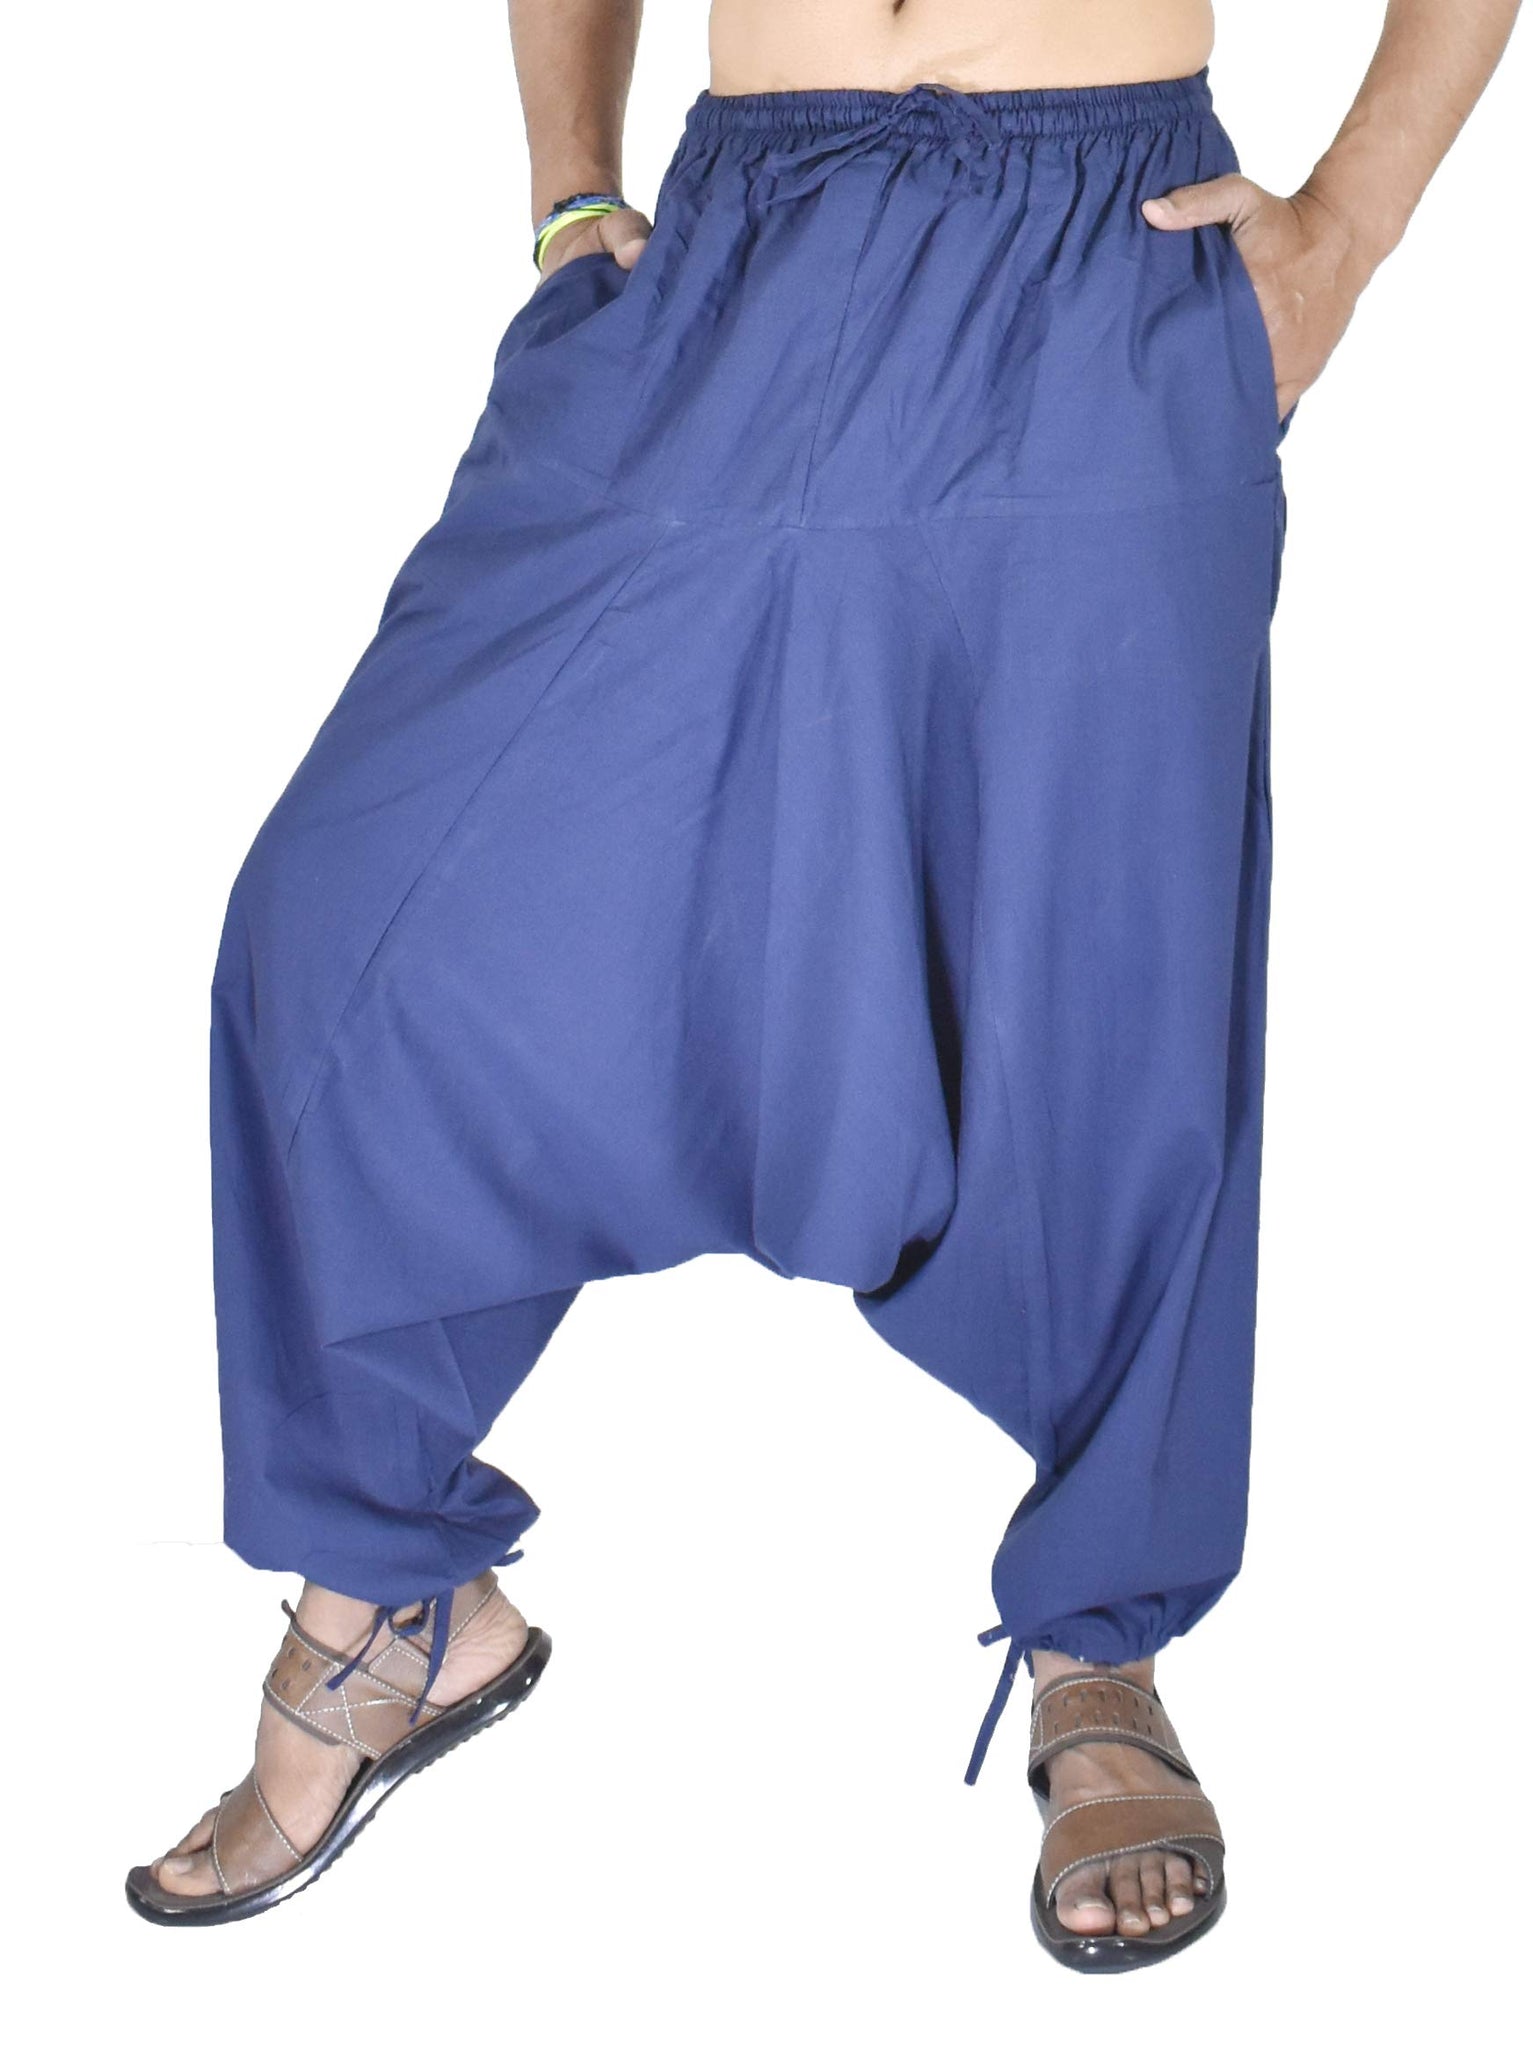 Turquoise Chiffon Harem Pants at Bellydance.com